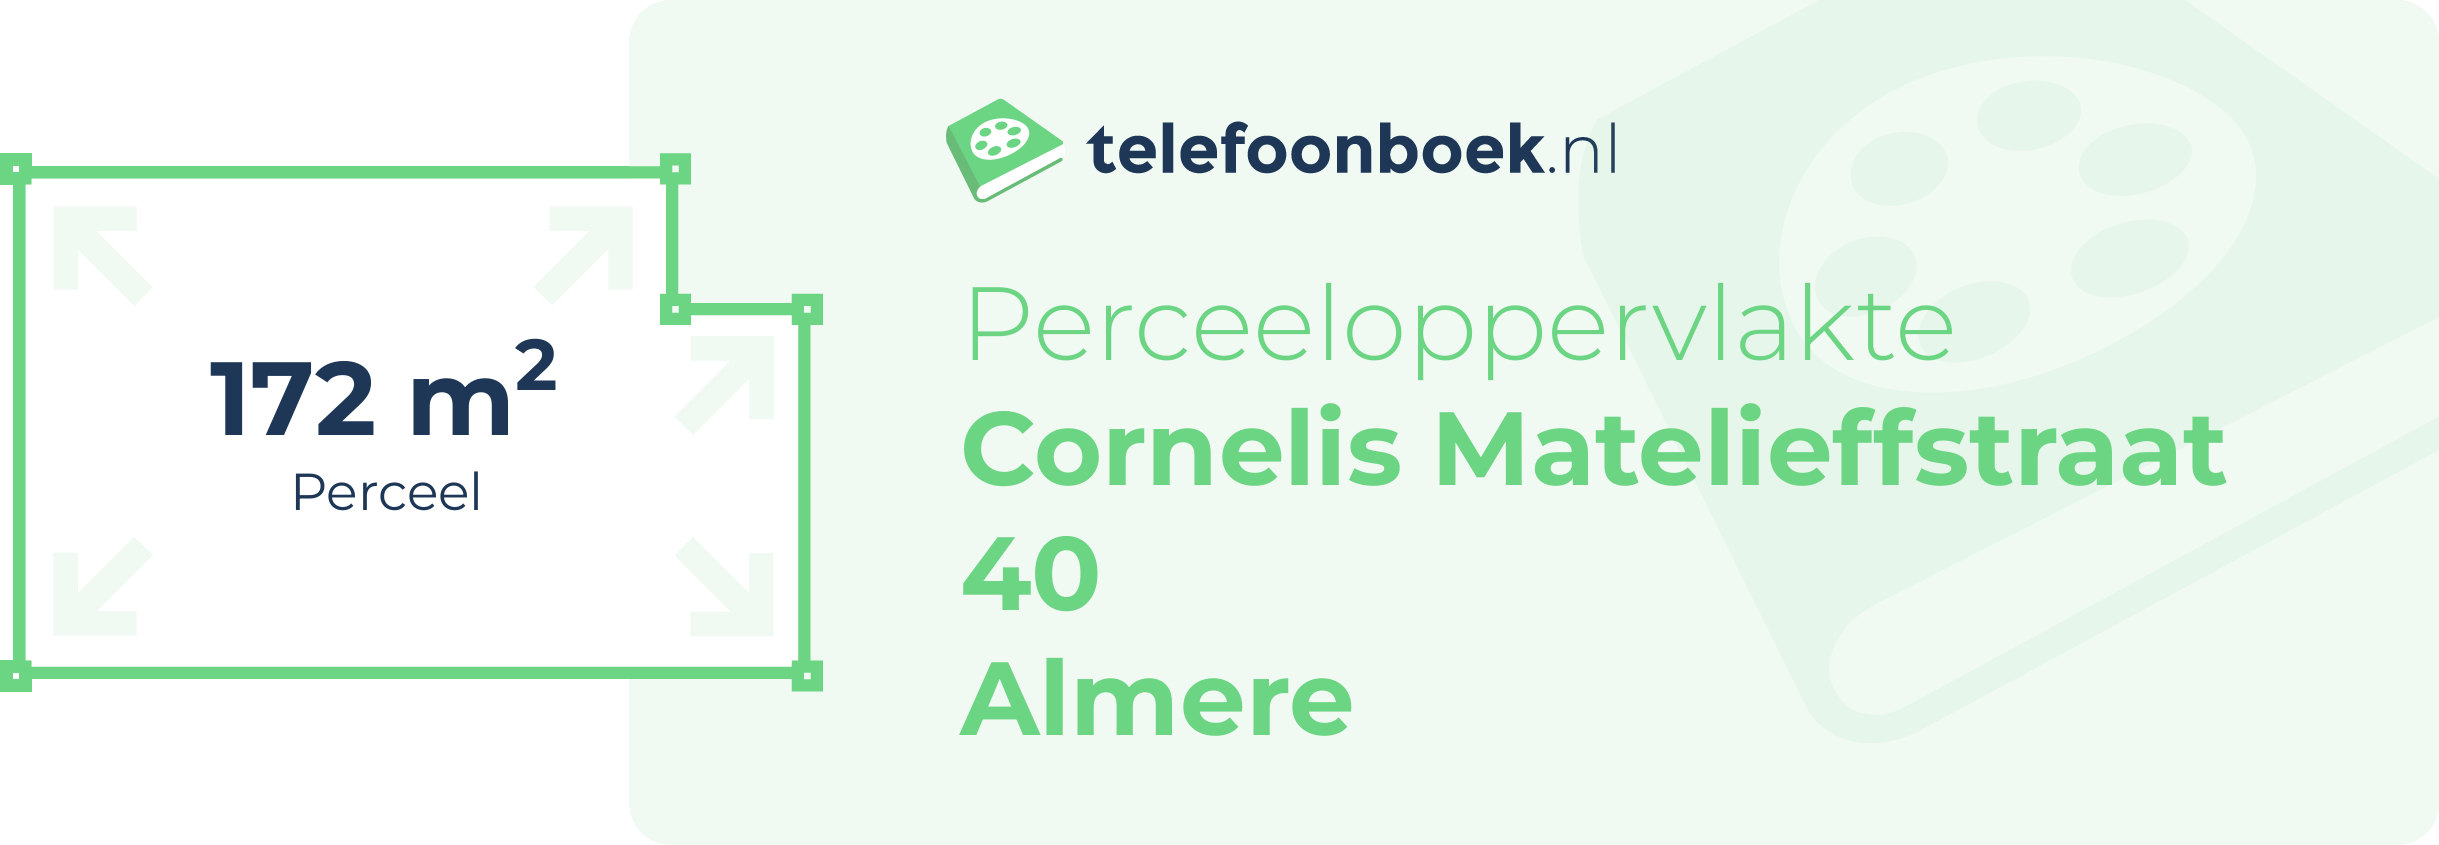 Perceeloppervlakte Cornelis Matelieffstraat 40 Almere